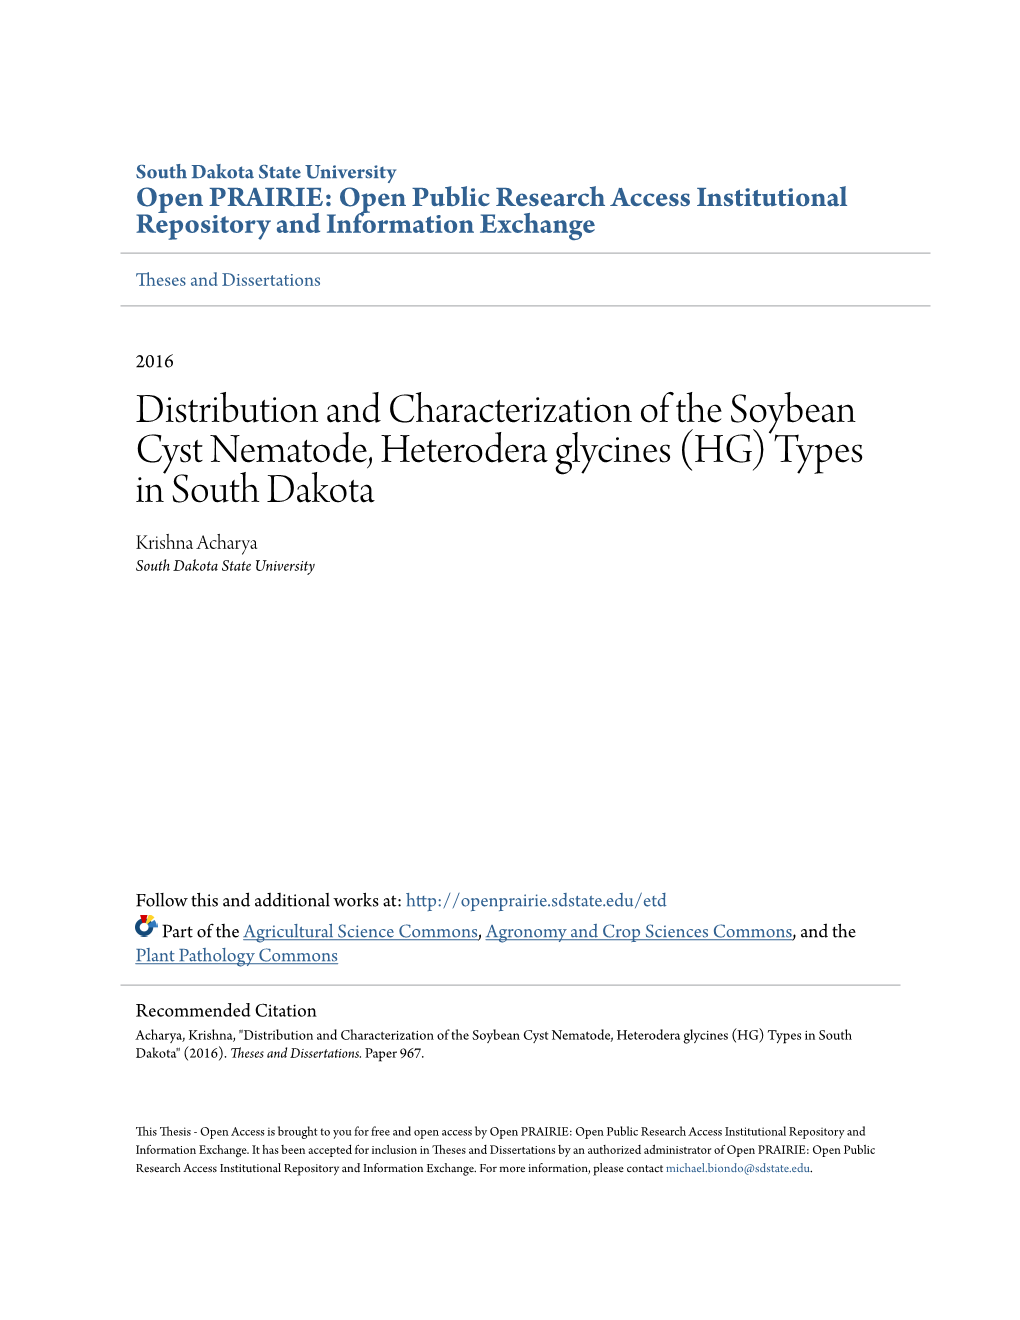 Distribution and Characterization of the Soybean Cyst Nematode, Heterodera Glycines (HG) Types in South Dakota Krishna Acharya South Dakota State University